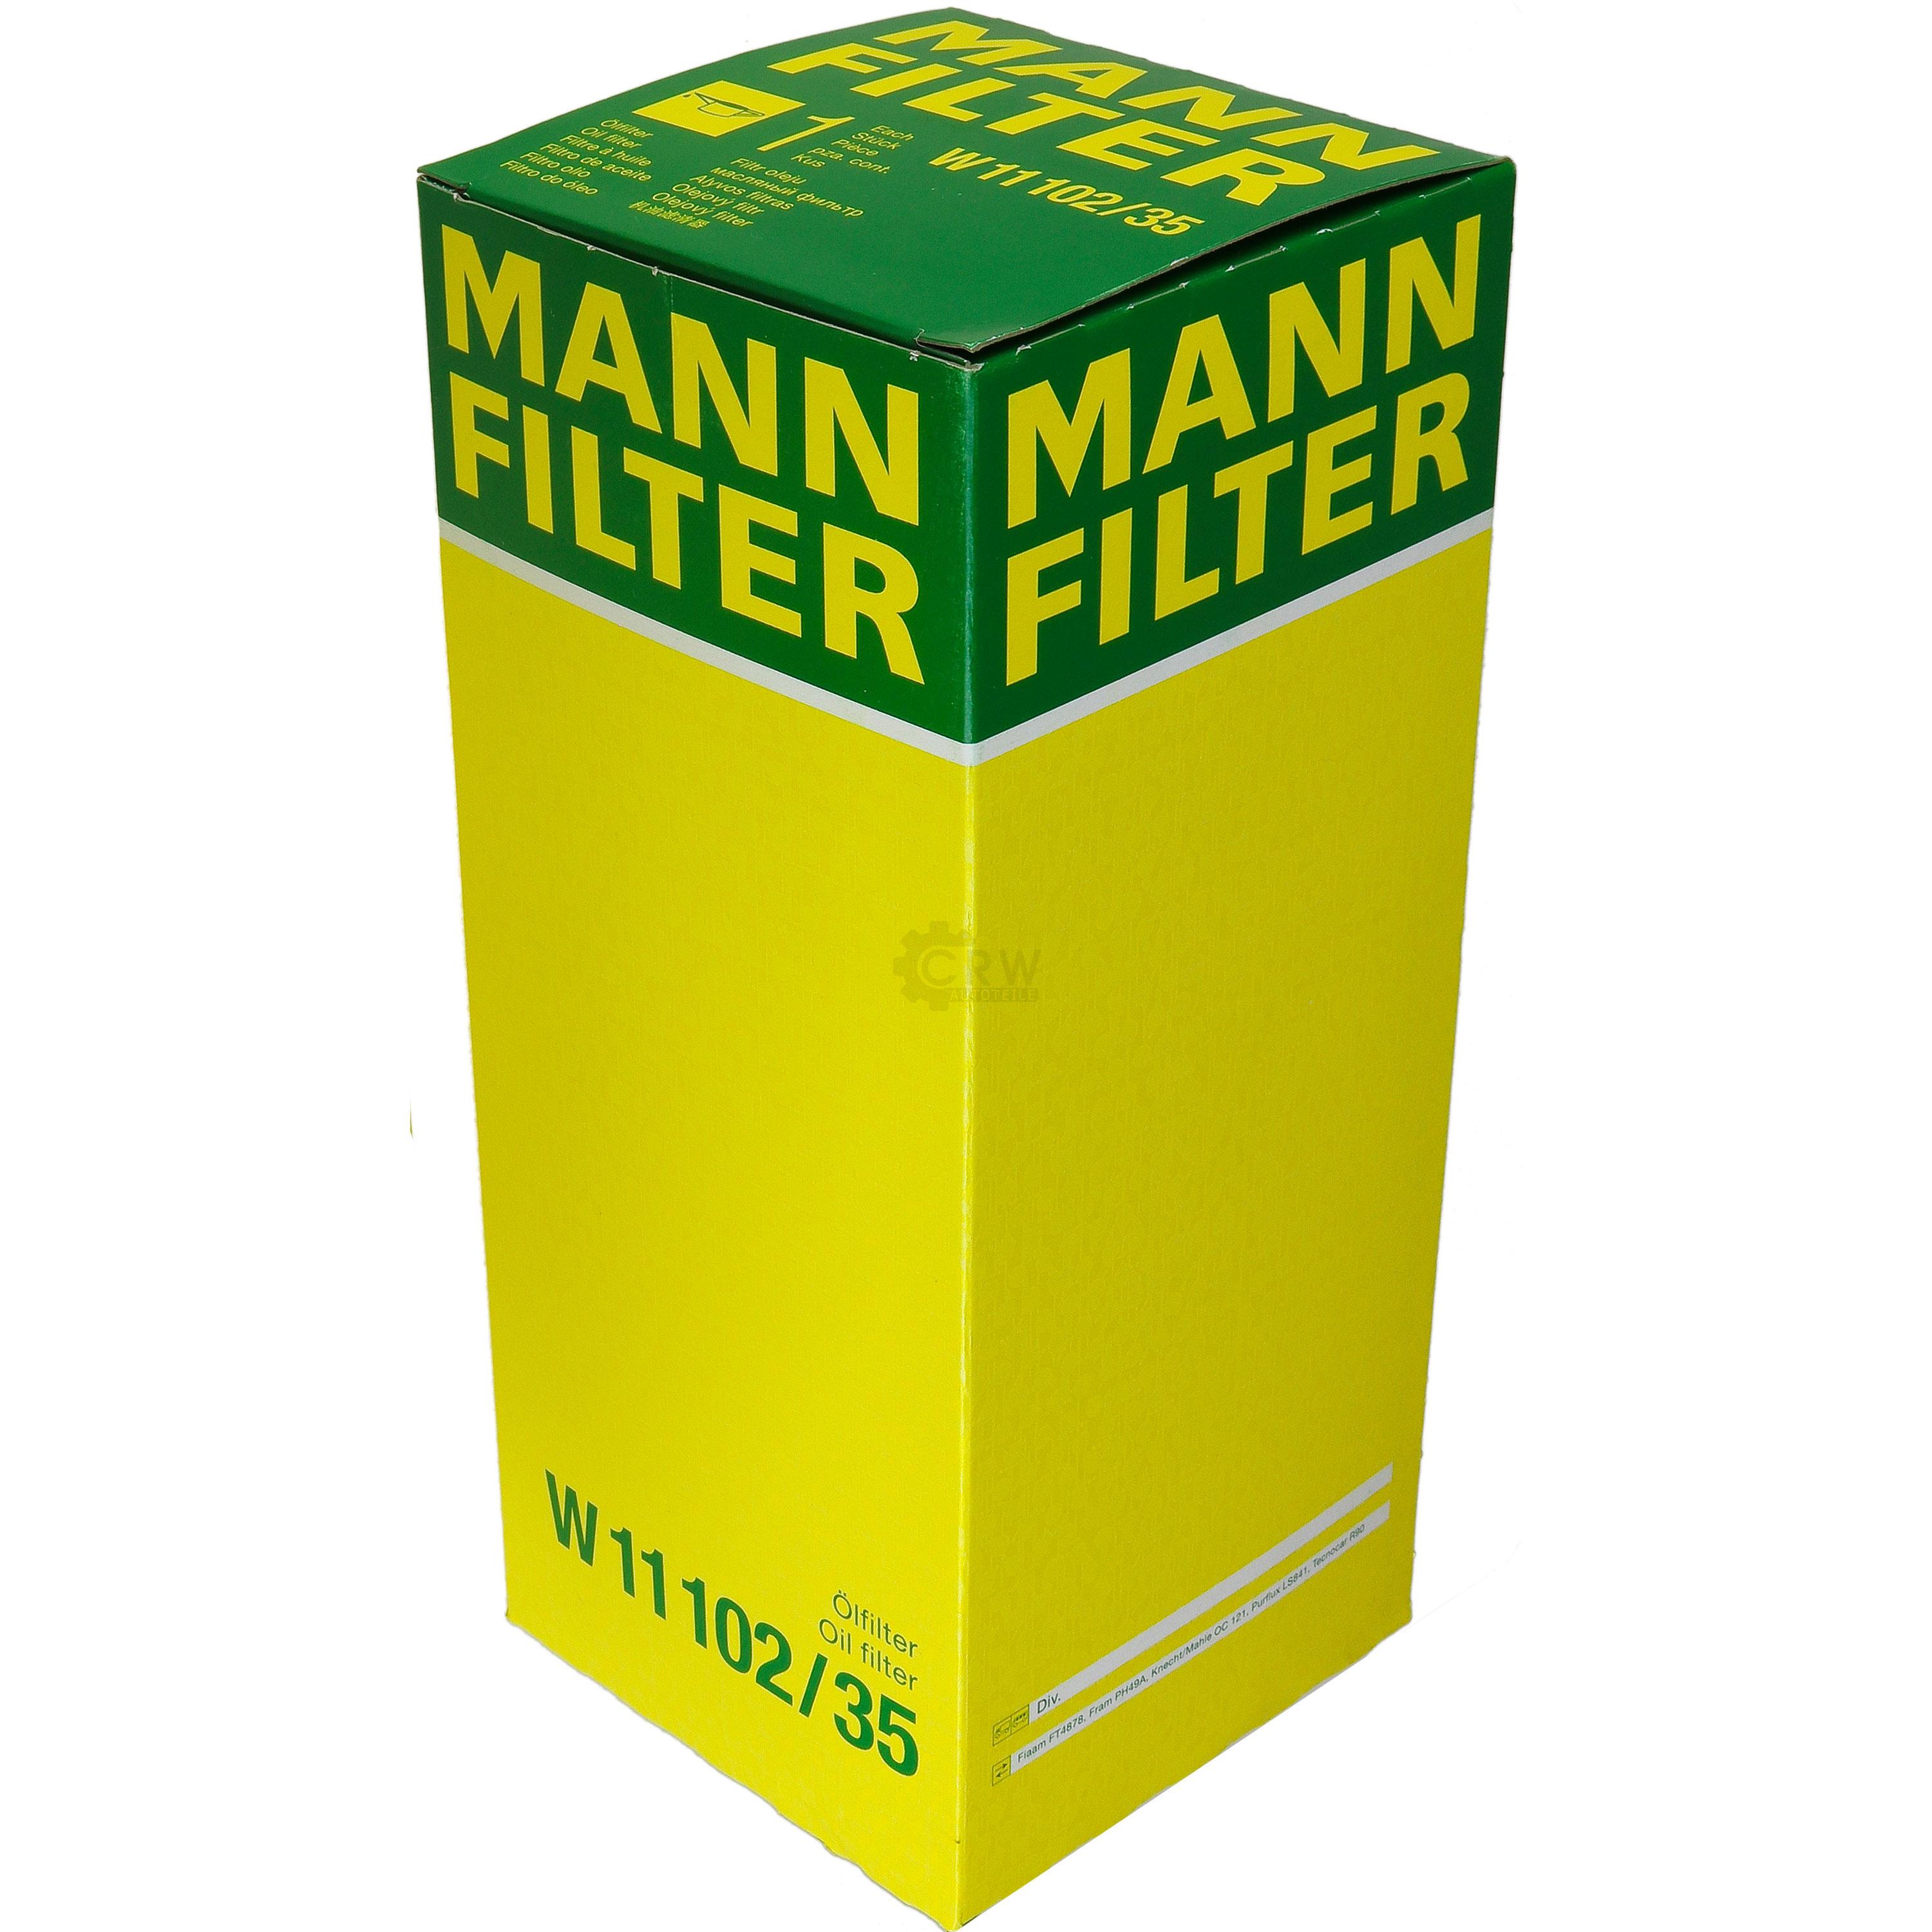 MANN-FILTER Ölfilter Oelfilter W 11 102/35 Oil Filter